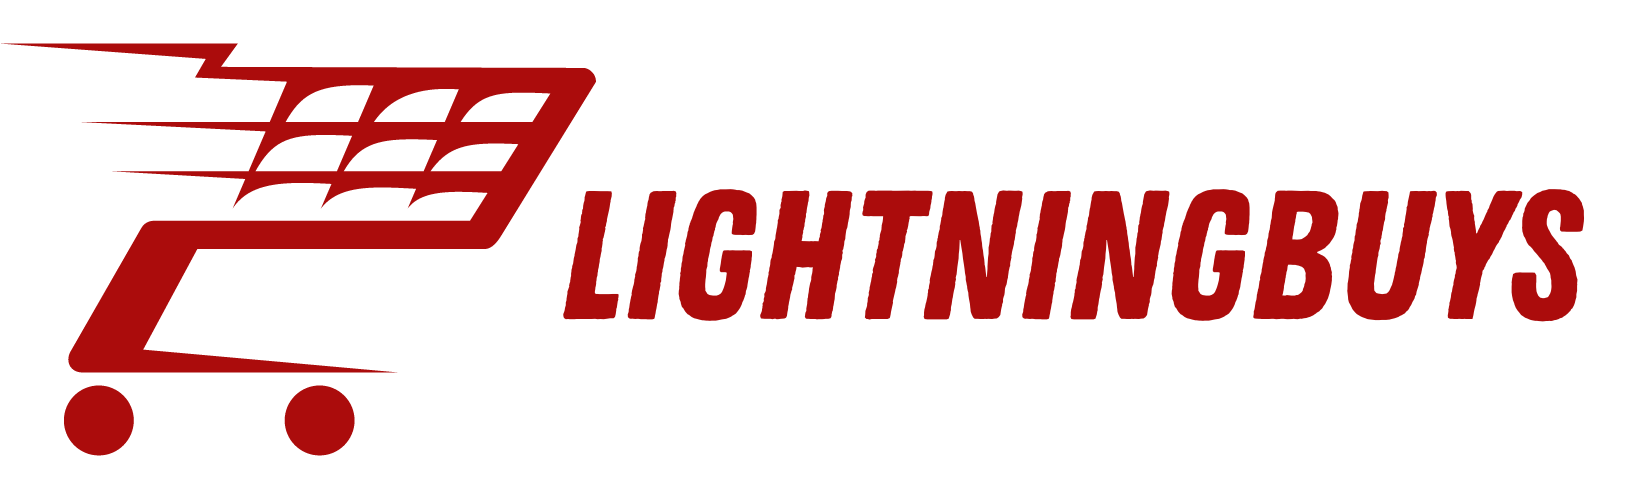 lightningbyes.com